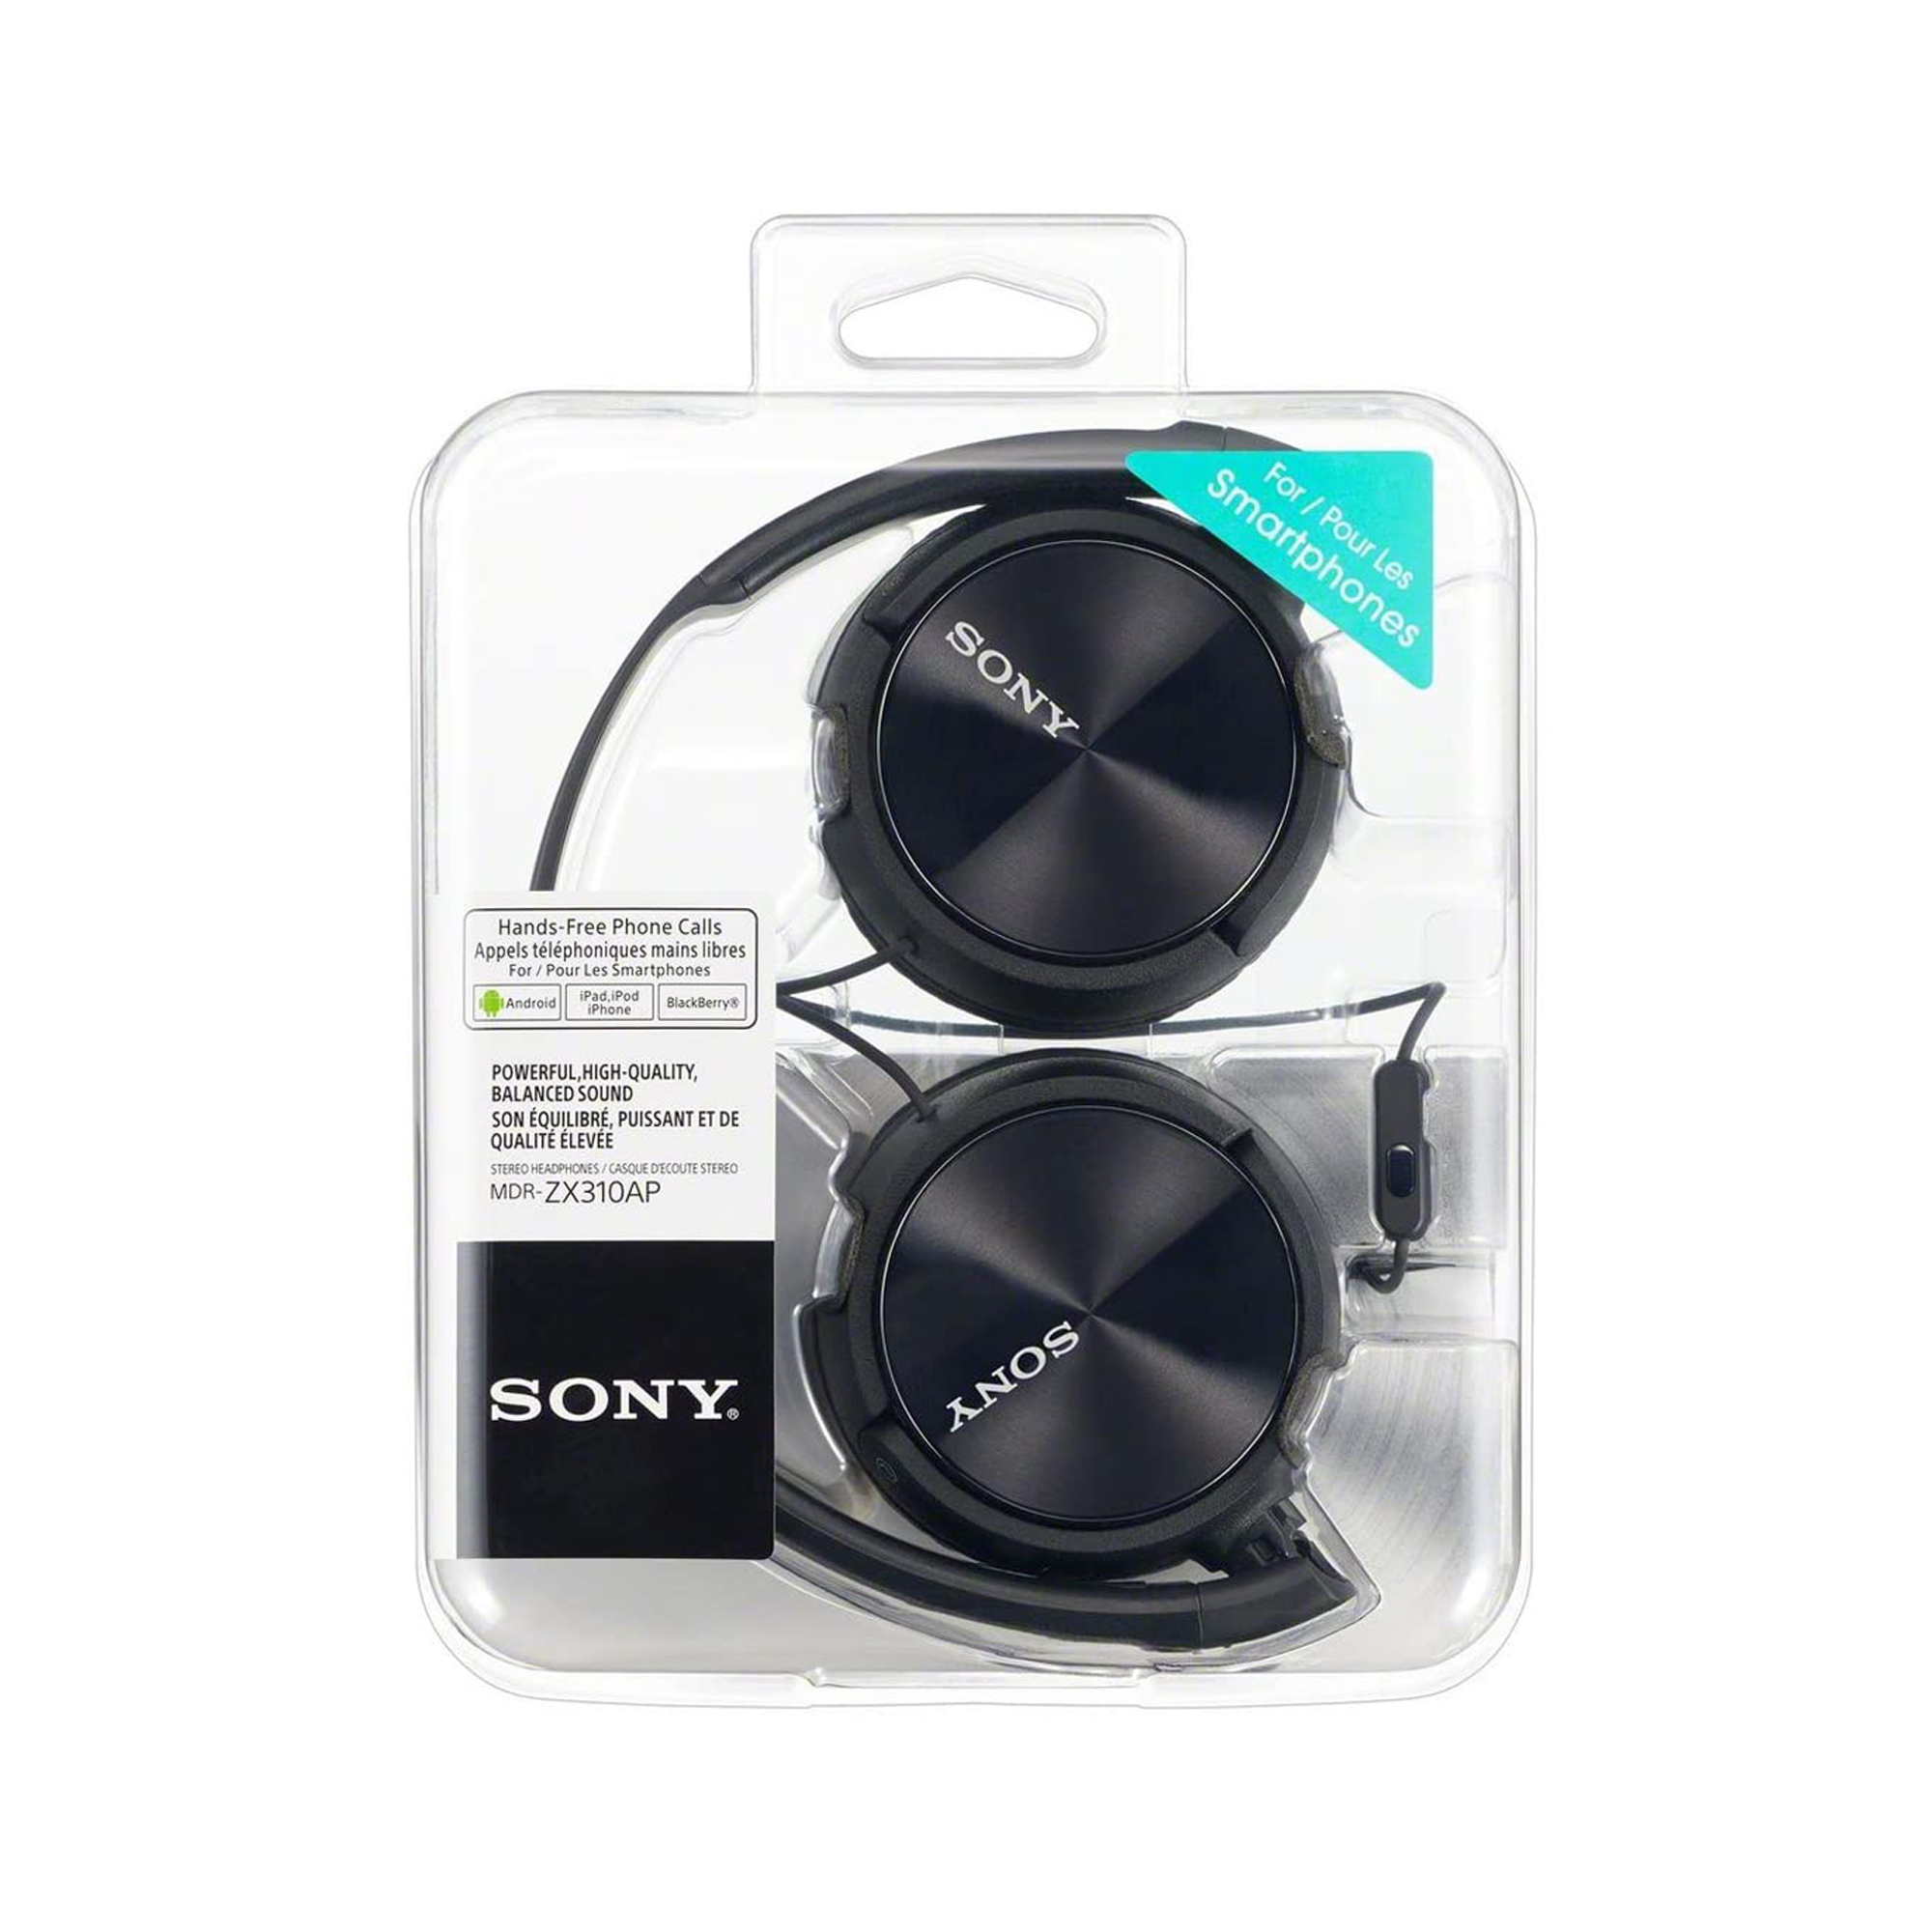 Sony mdr zx310ap